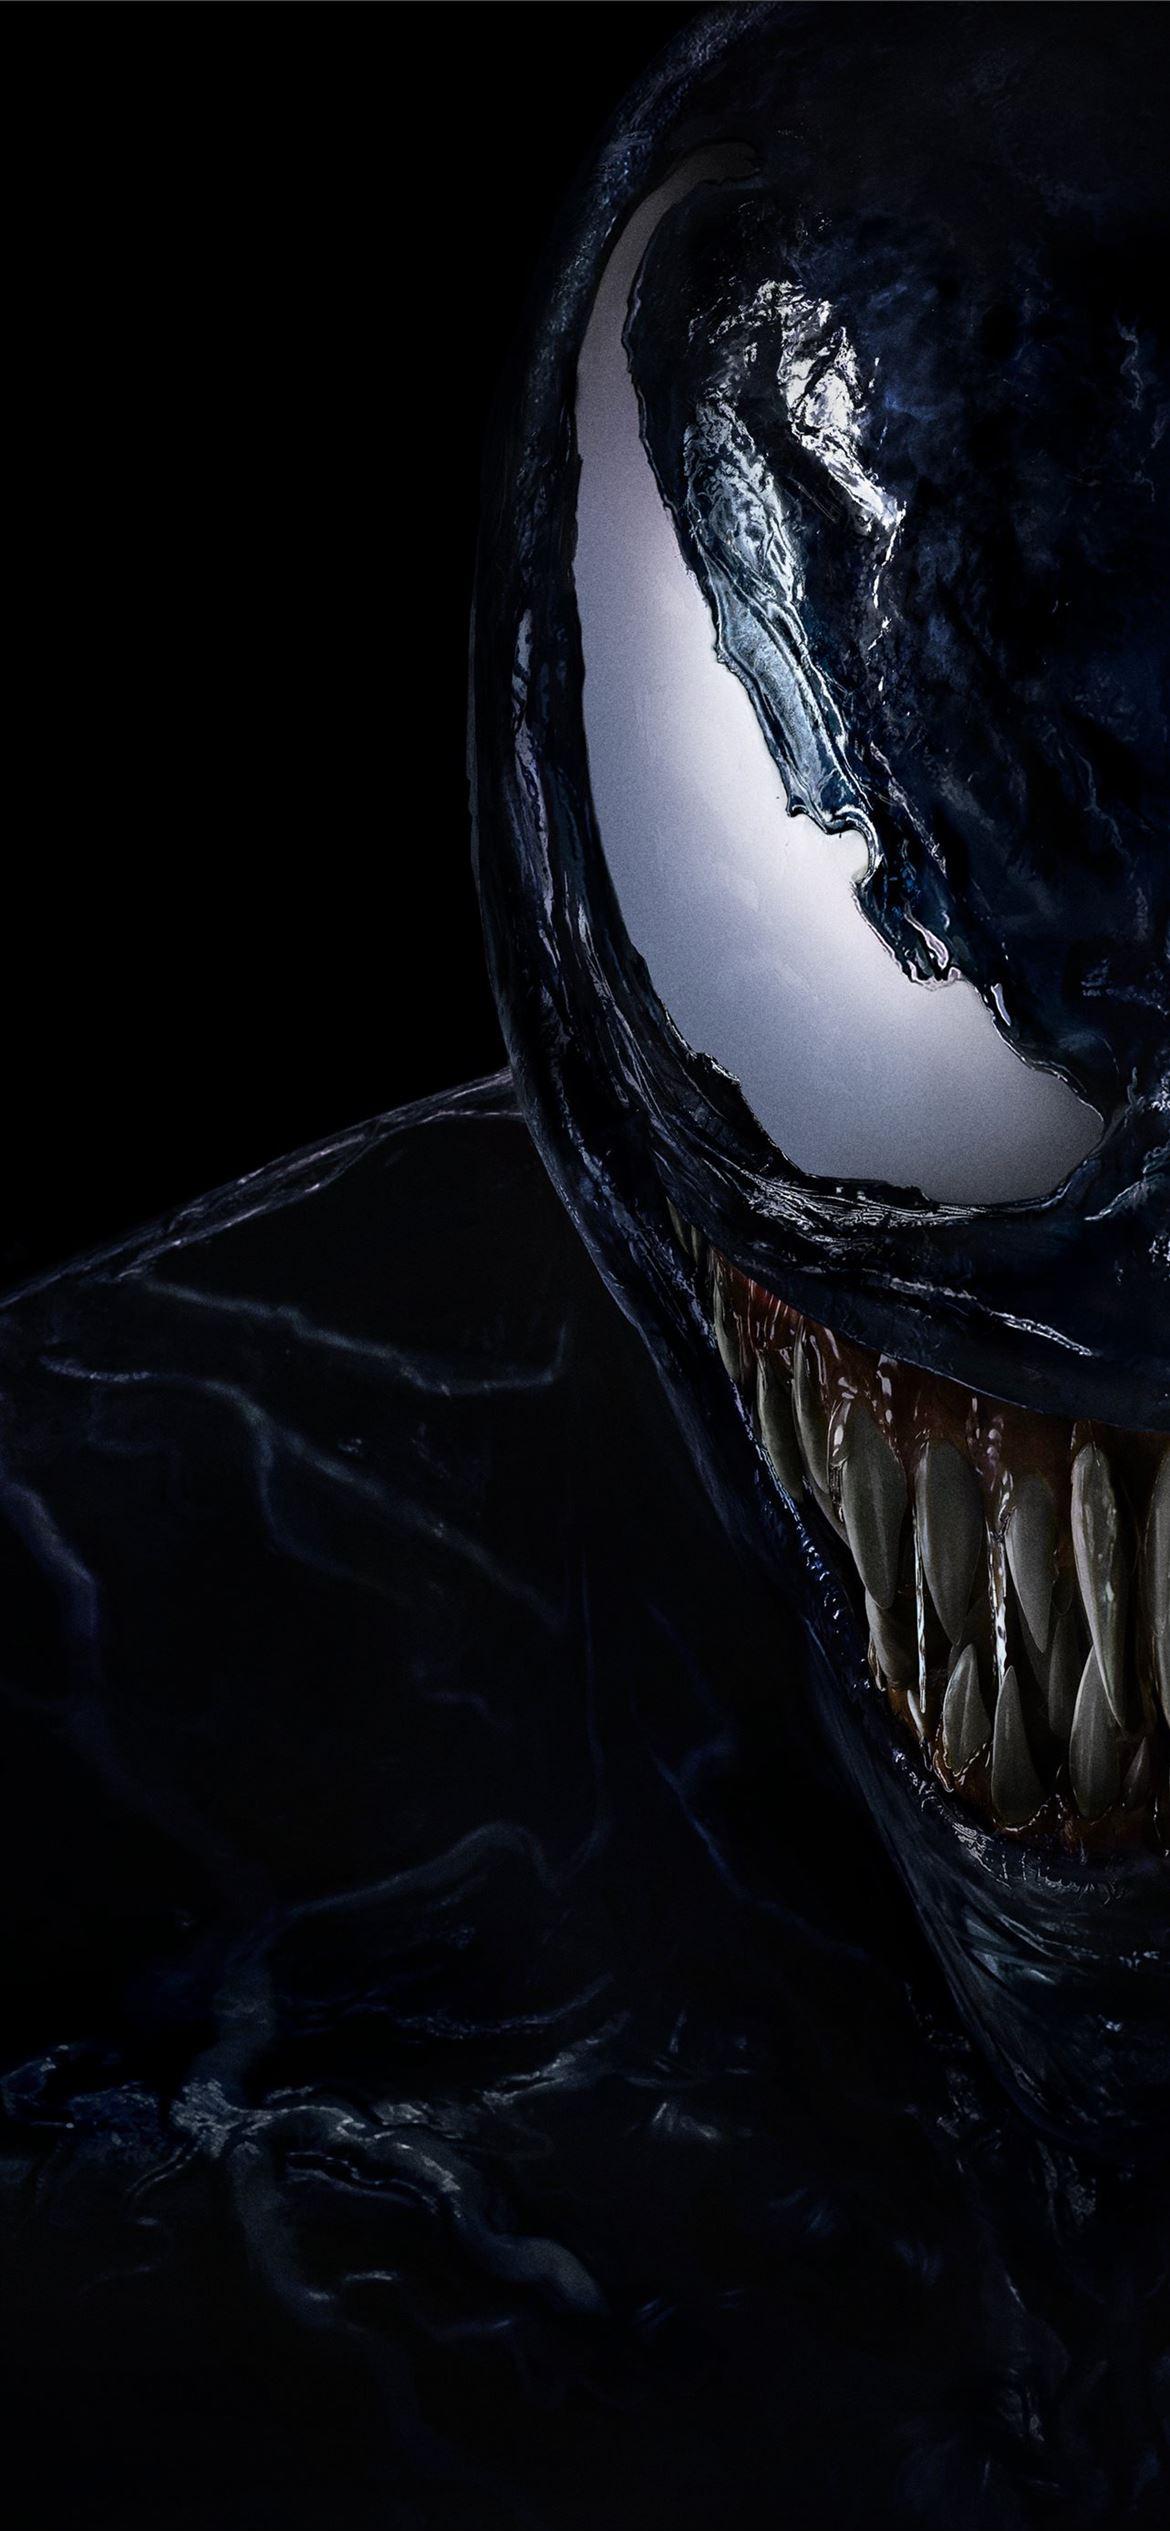 Venom Movie Official Poster 8k Samsung Galaxy Note iPhone